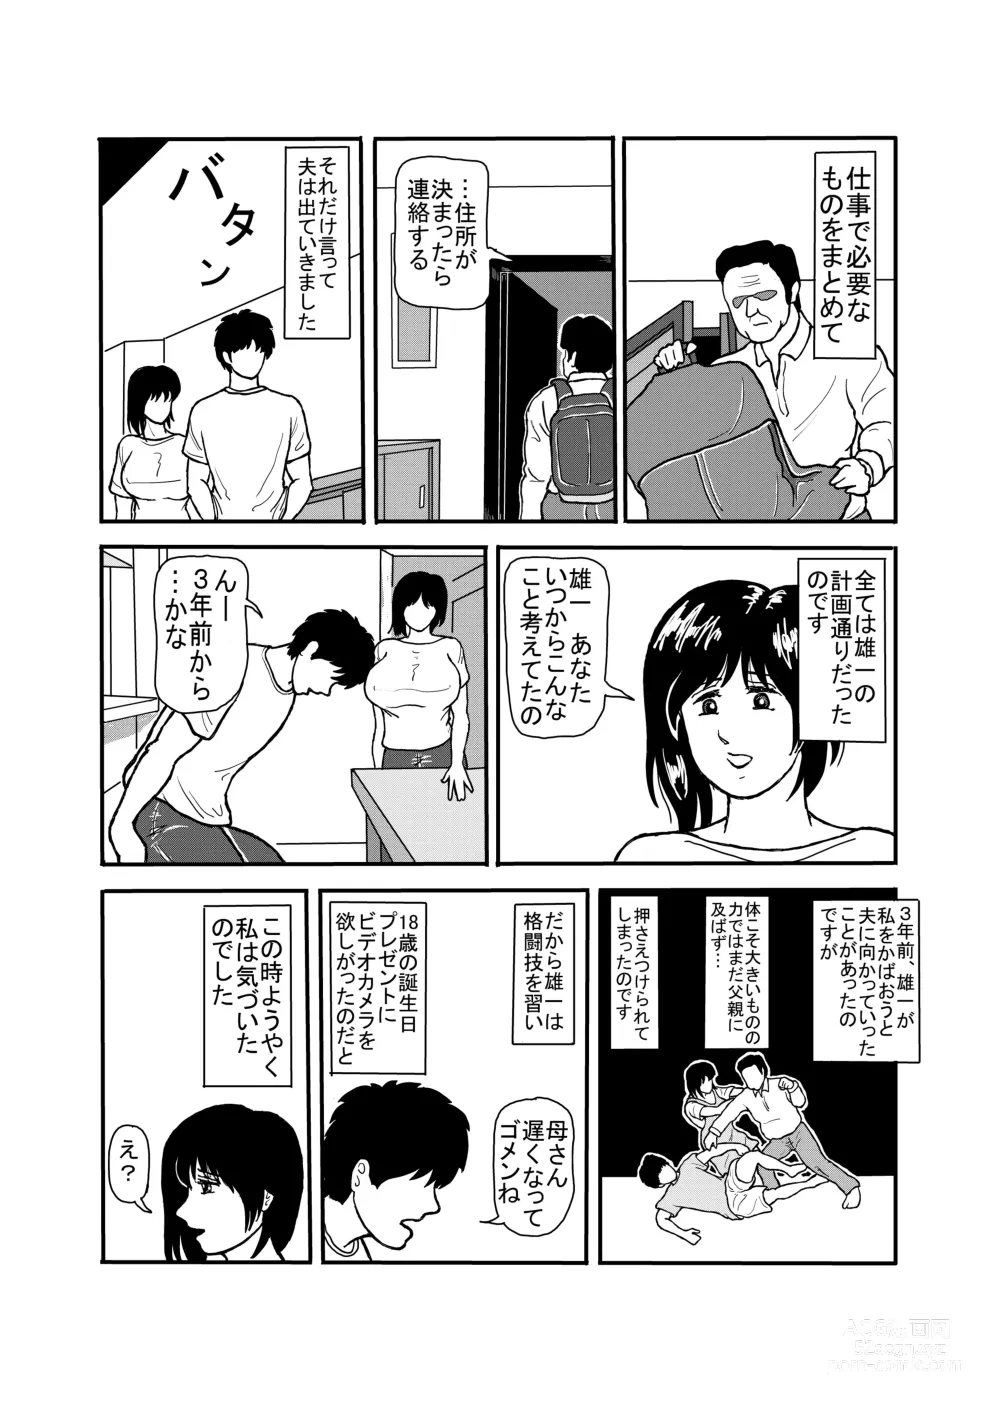 Page 14 of doujinshi 息子と二人きりで暮らすことになりました―初めての膣内射精―